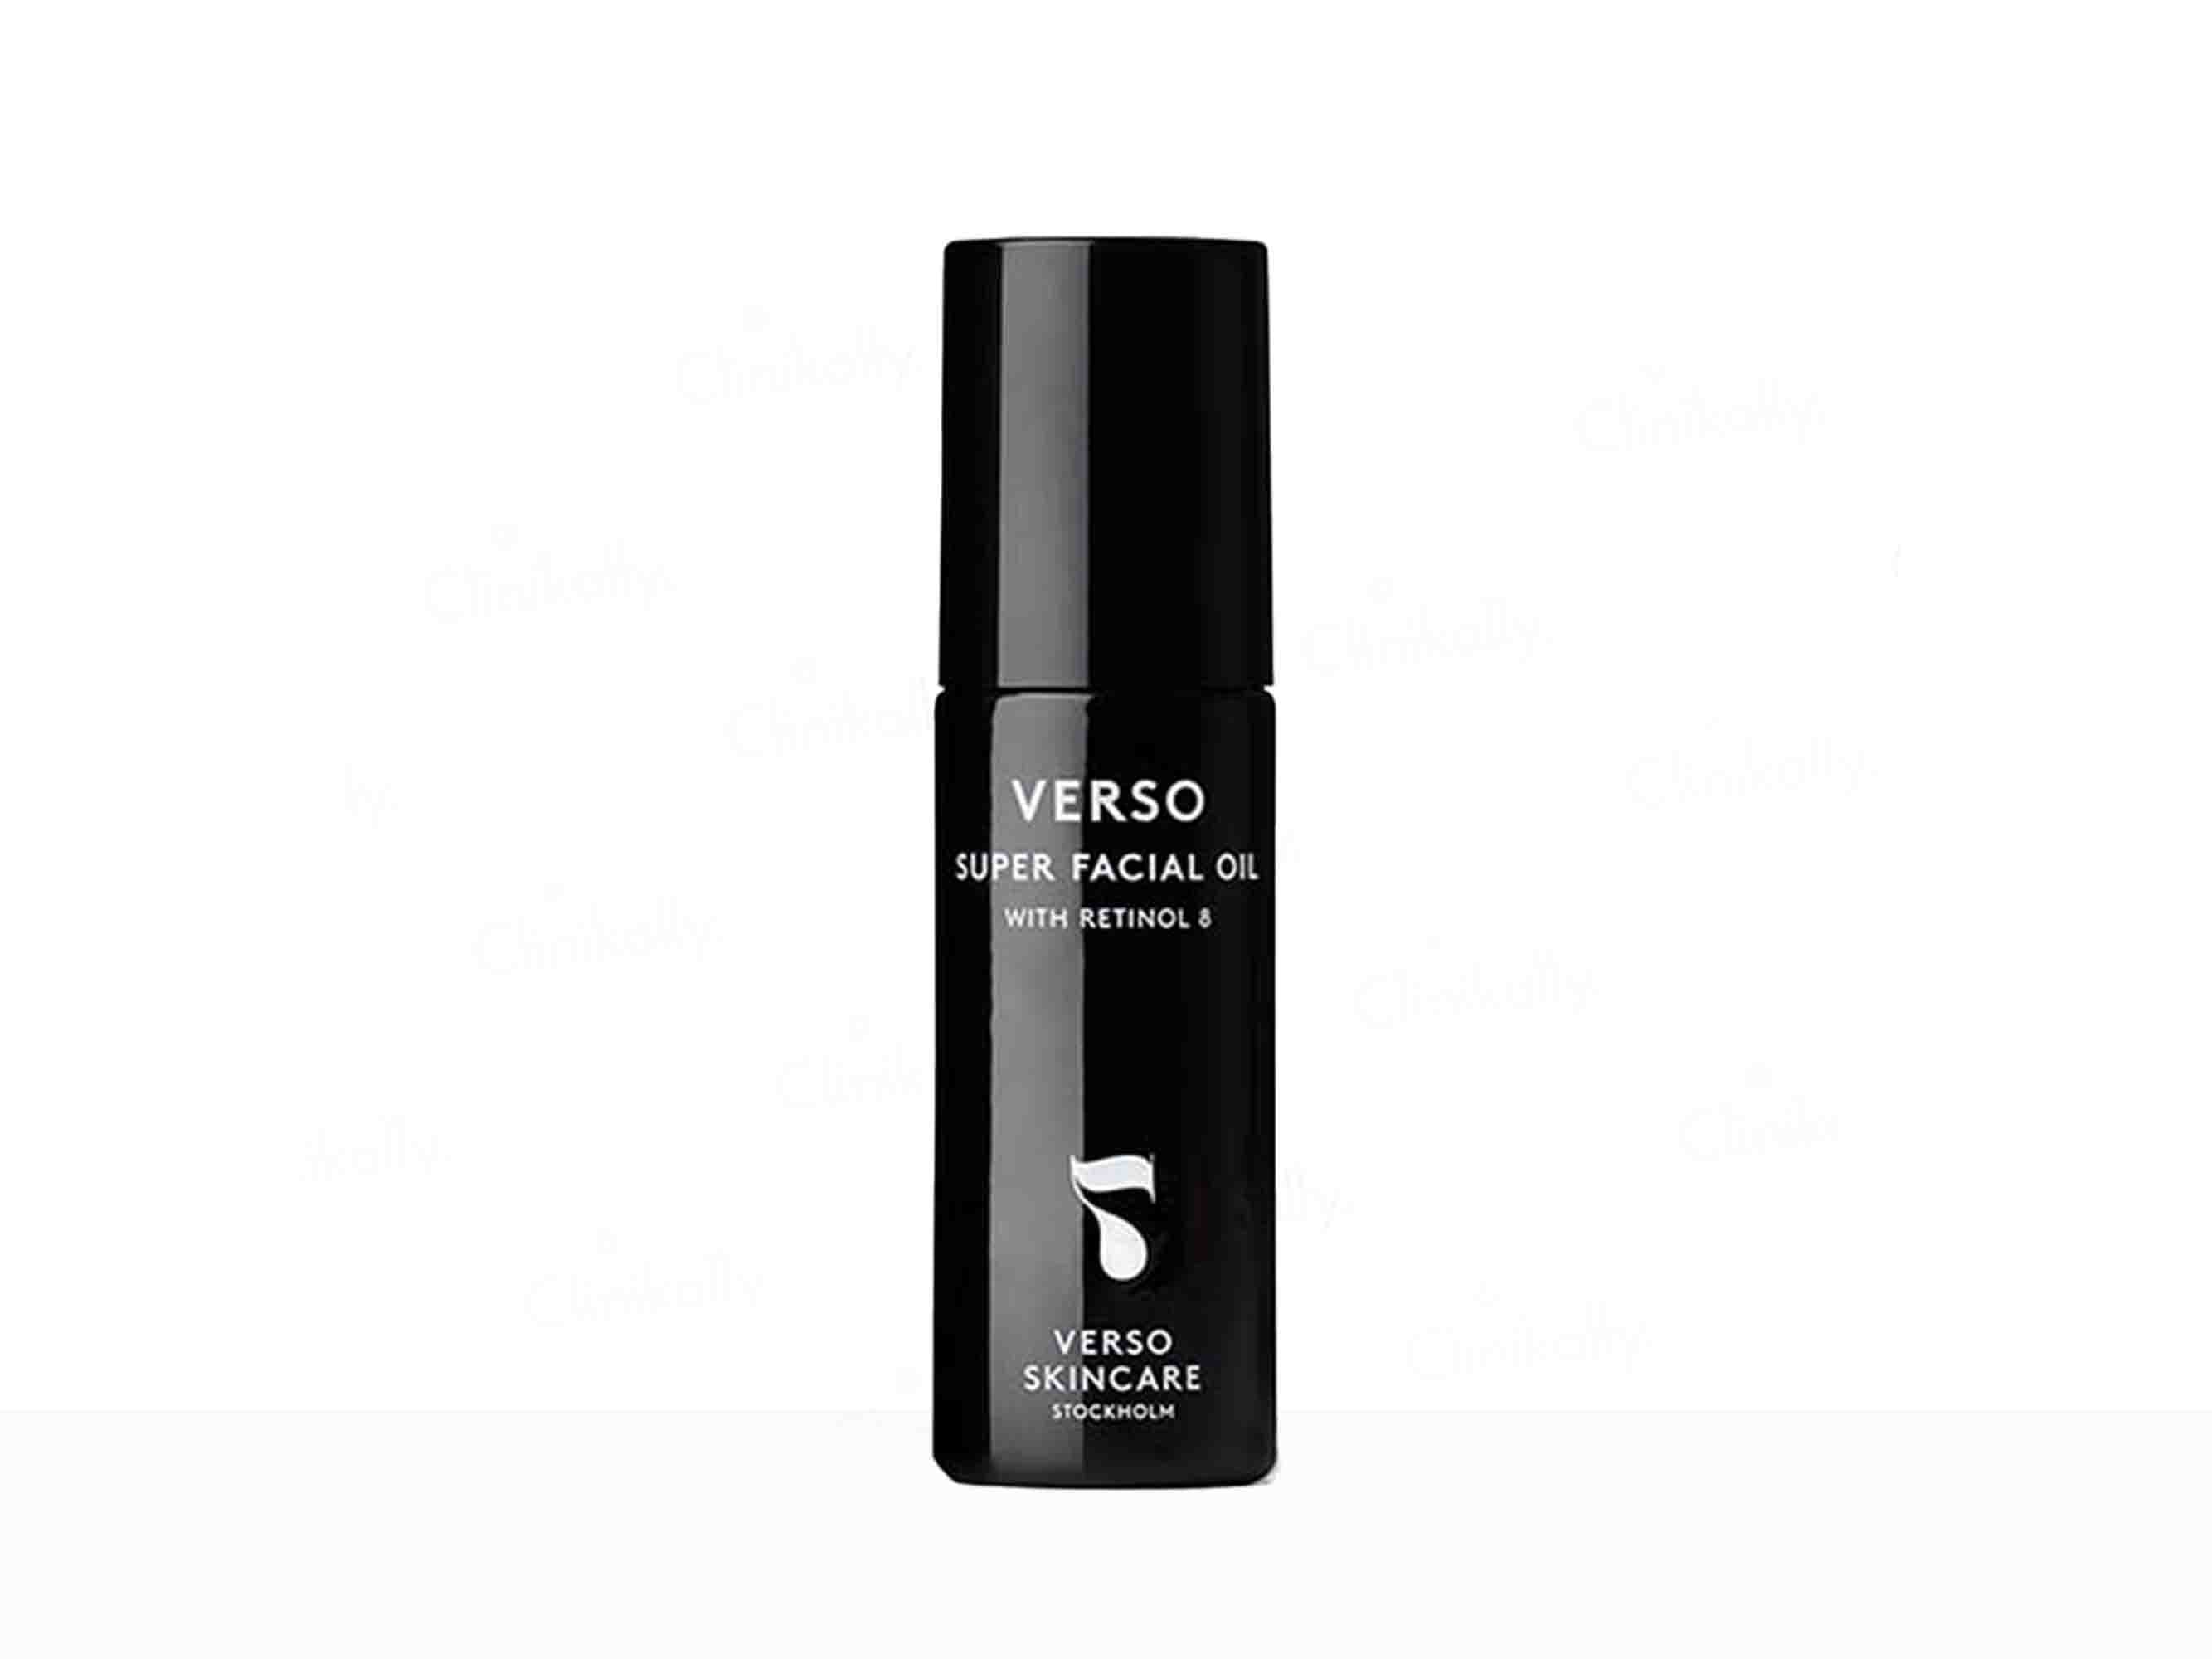 Verso Super Facial Oil With Retinol 8